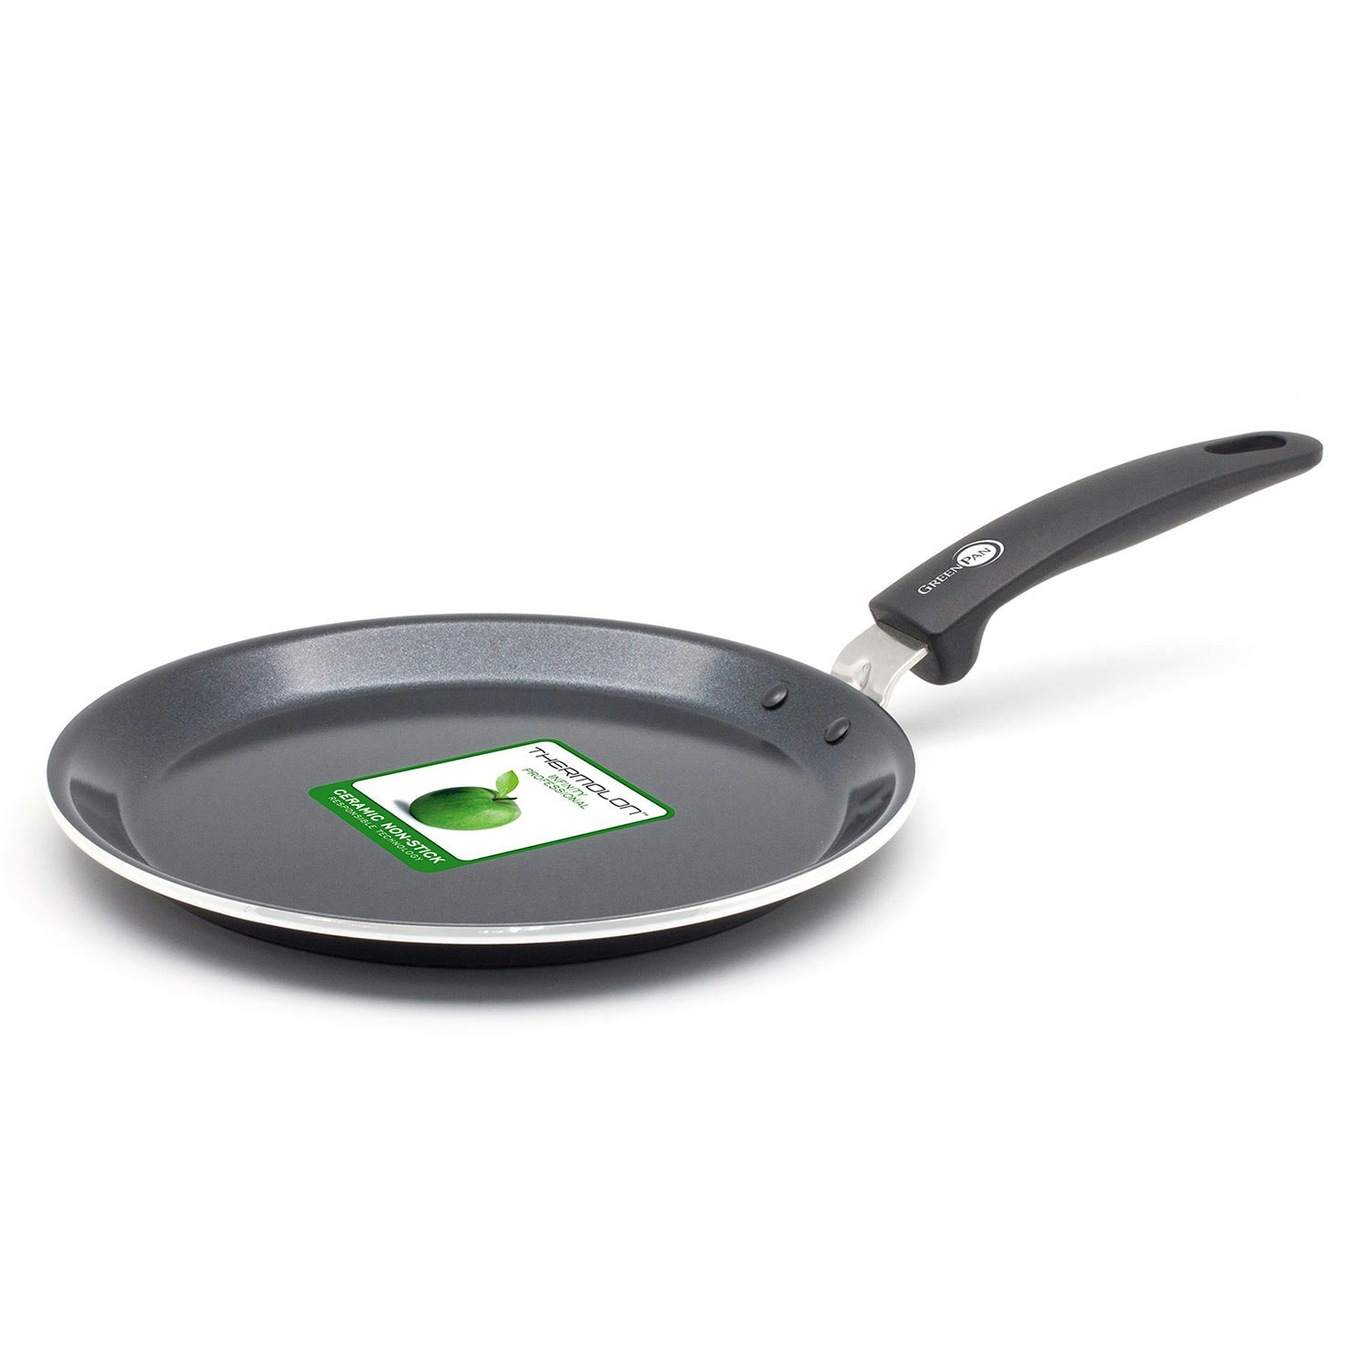 https://royaldesign.com/image/2/greenpan-essentials-pancake-pan-28cm-0?w=800&quality=80